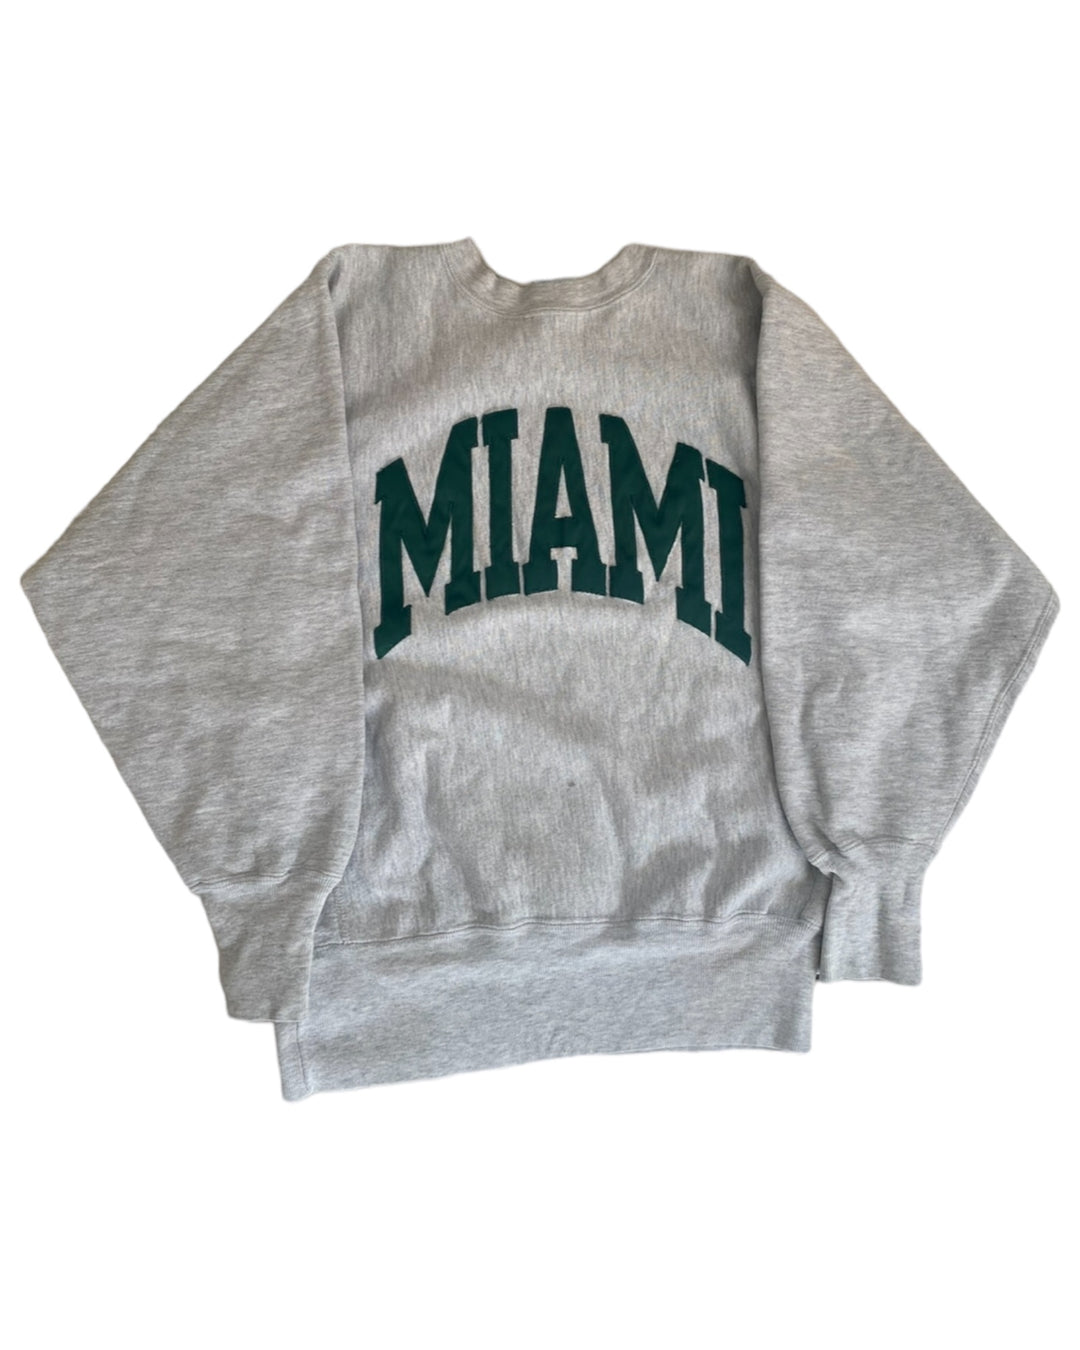 Miami Vintage Sweatshirt